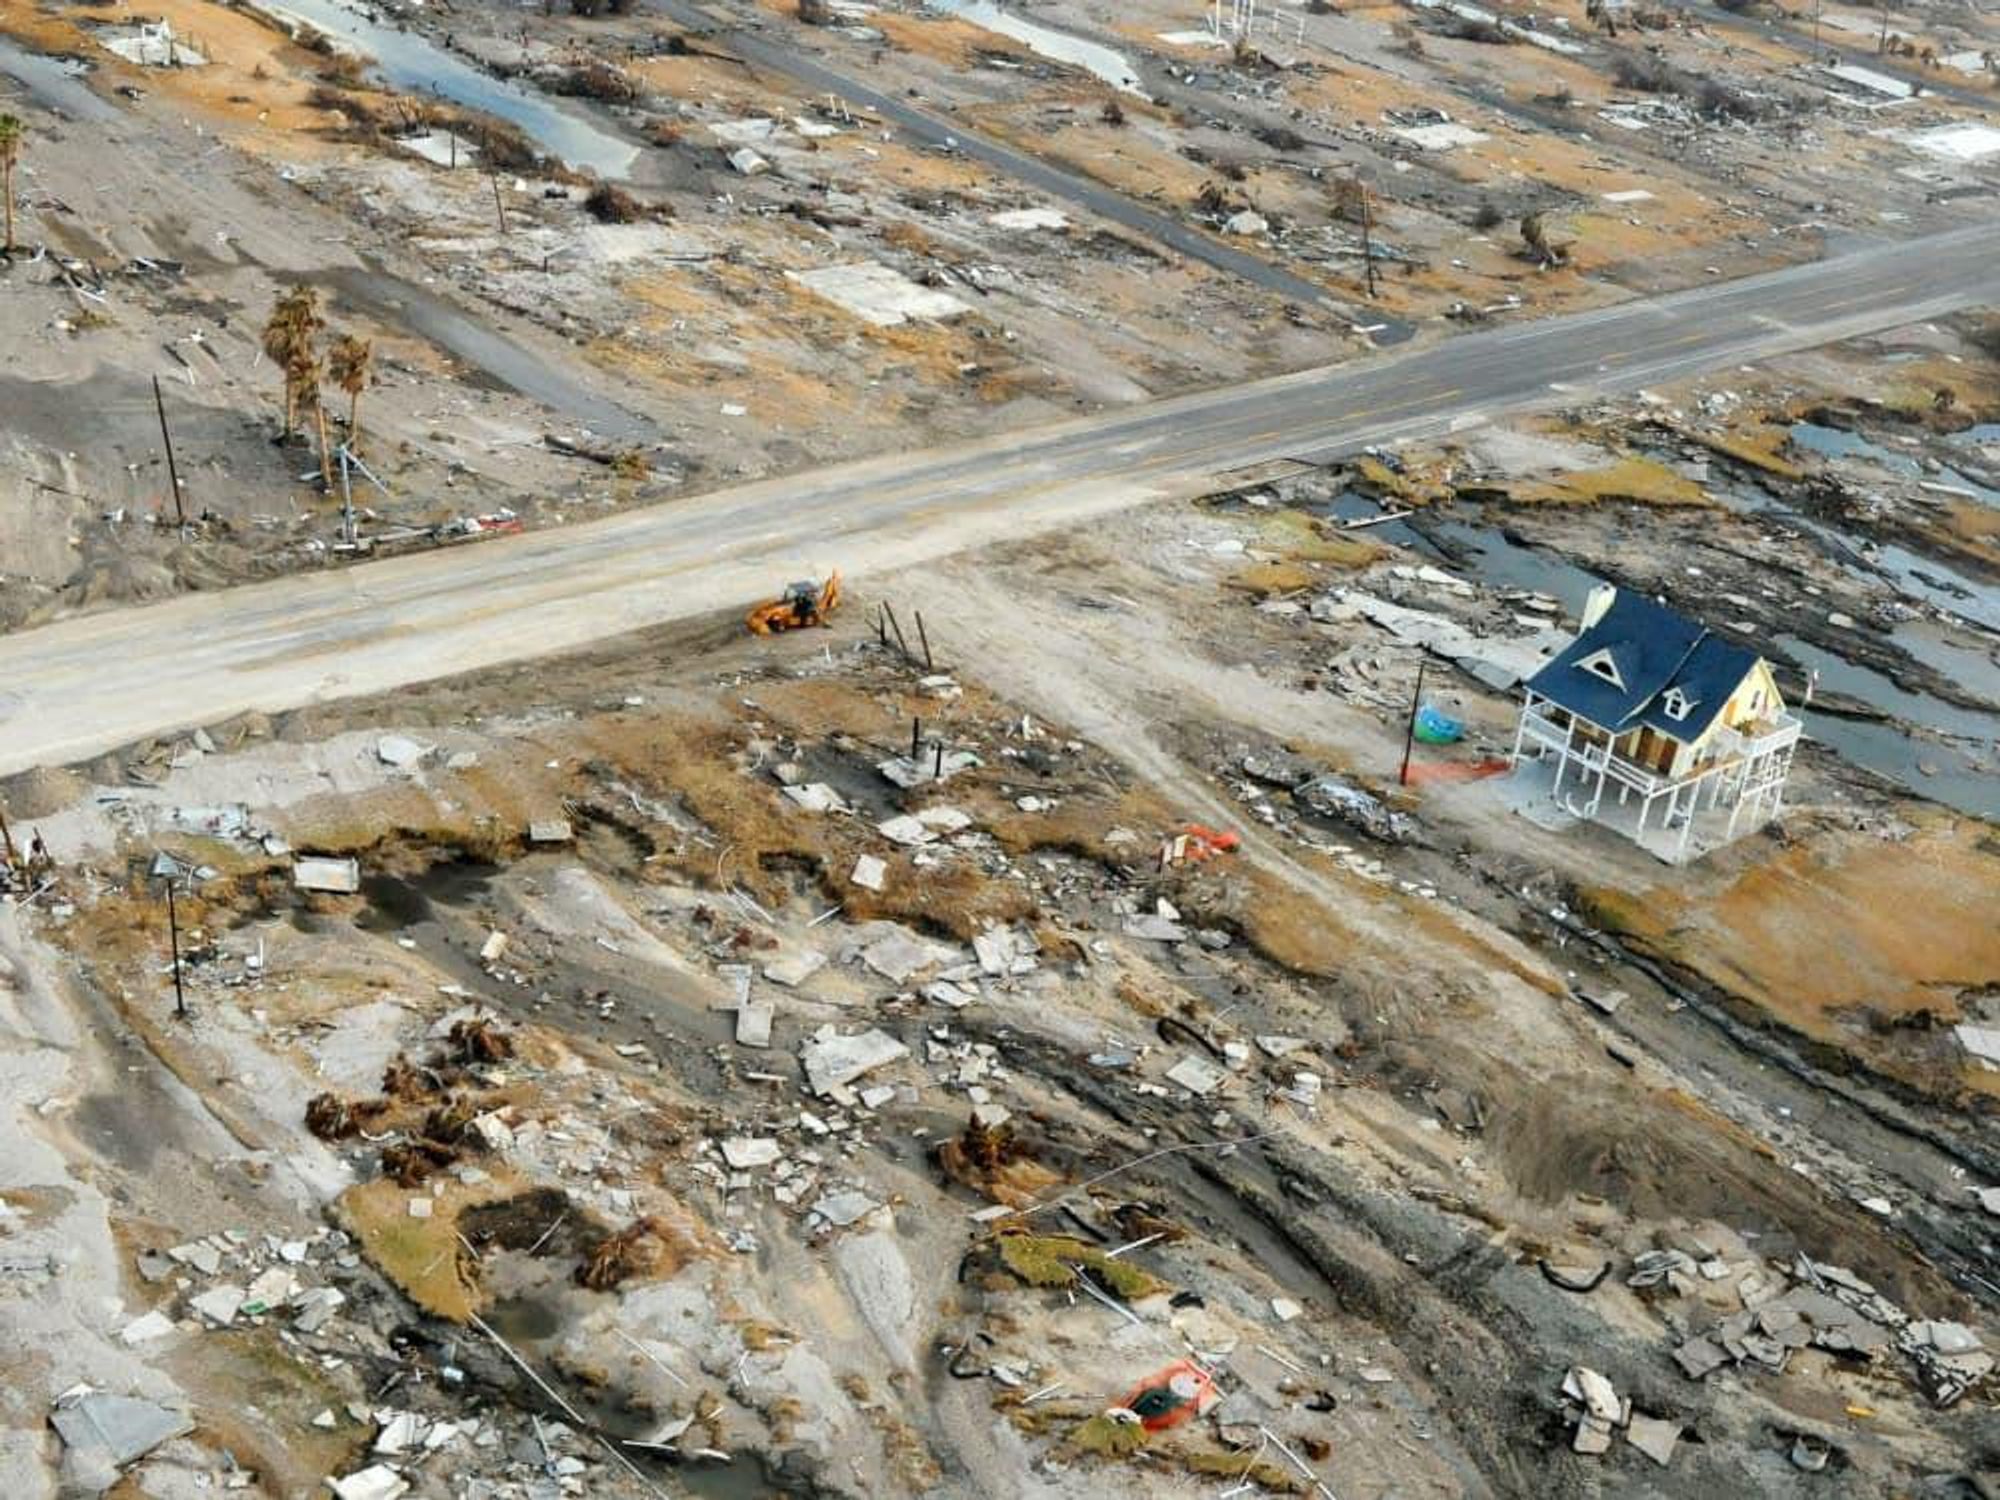 News_Carol Rust_Worst Events of Decade_Dec. 2009_Hurricane_Ike_Gilchrist_damage